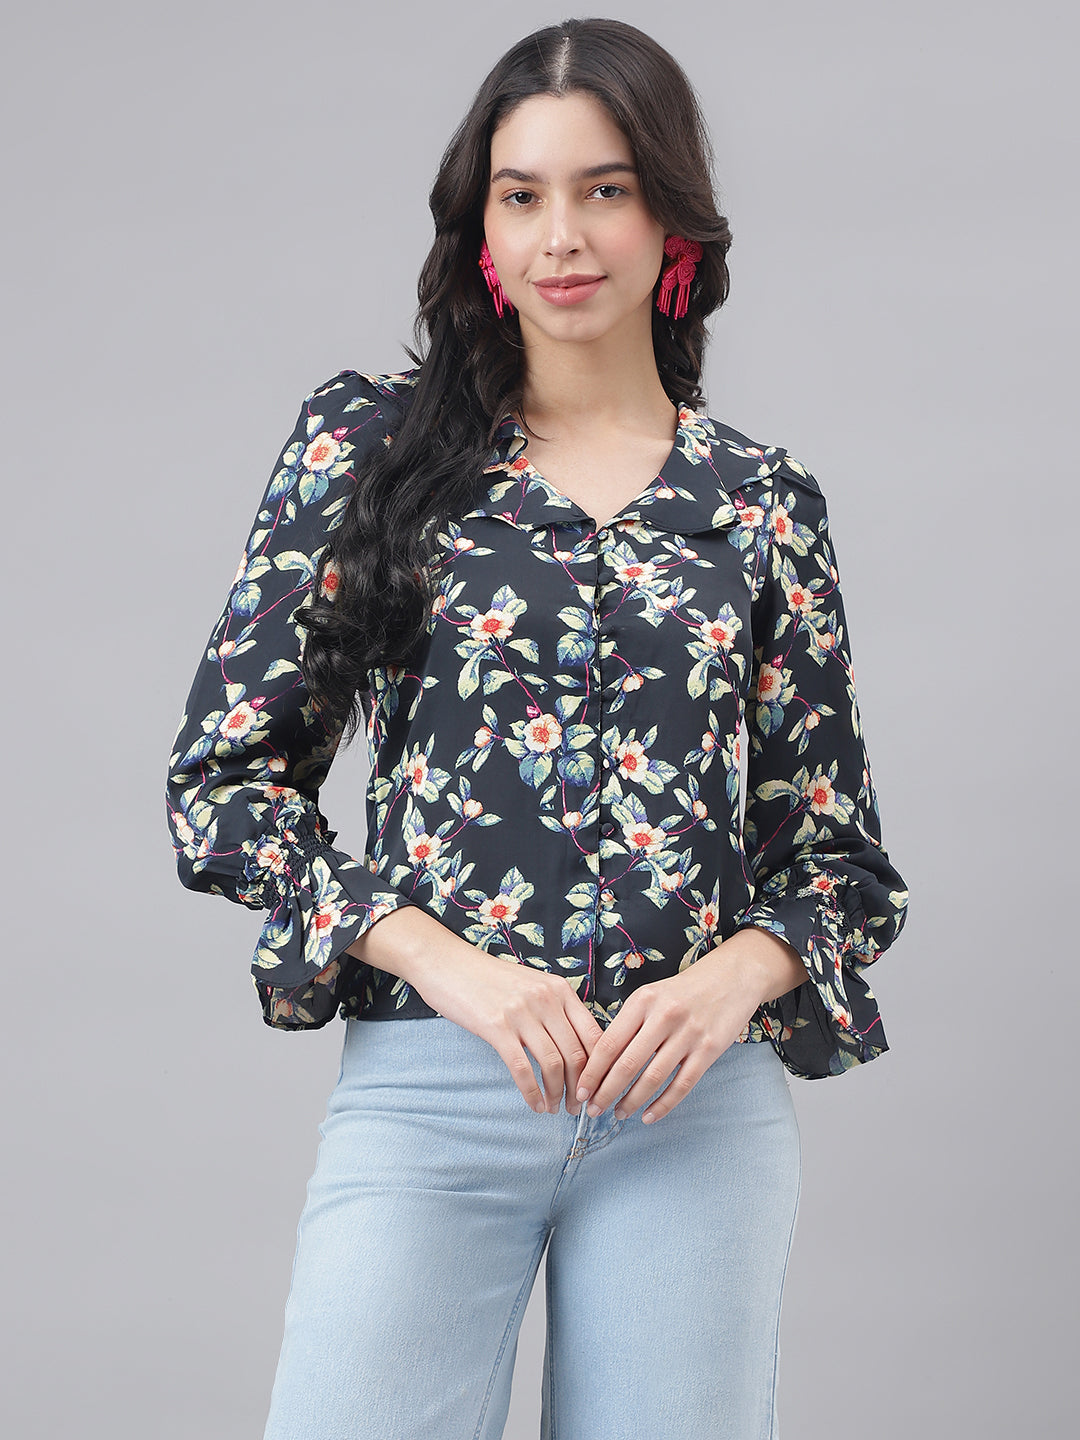 Black Full Sleeve Shirt Collar Women Floral Top